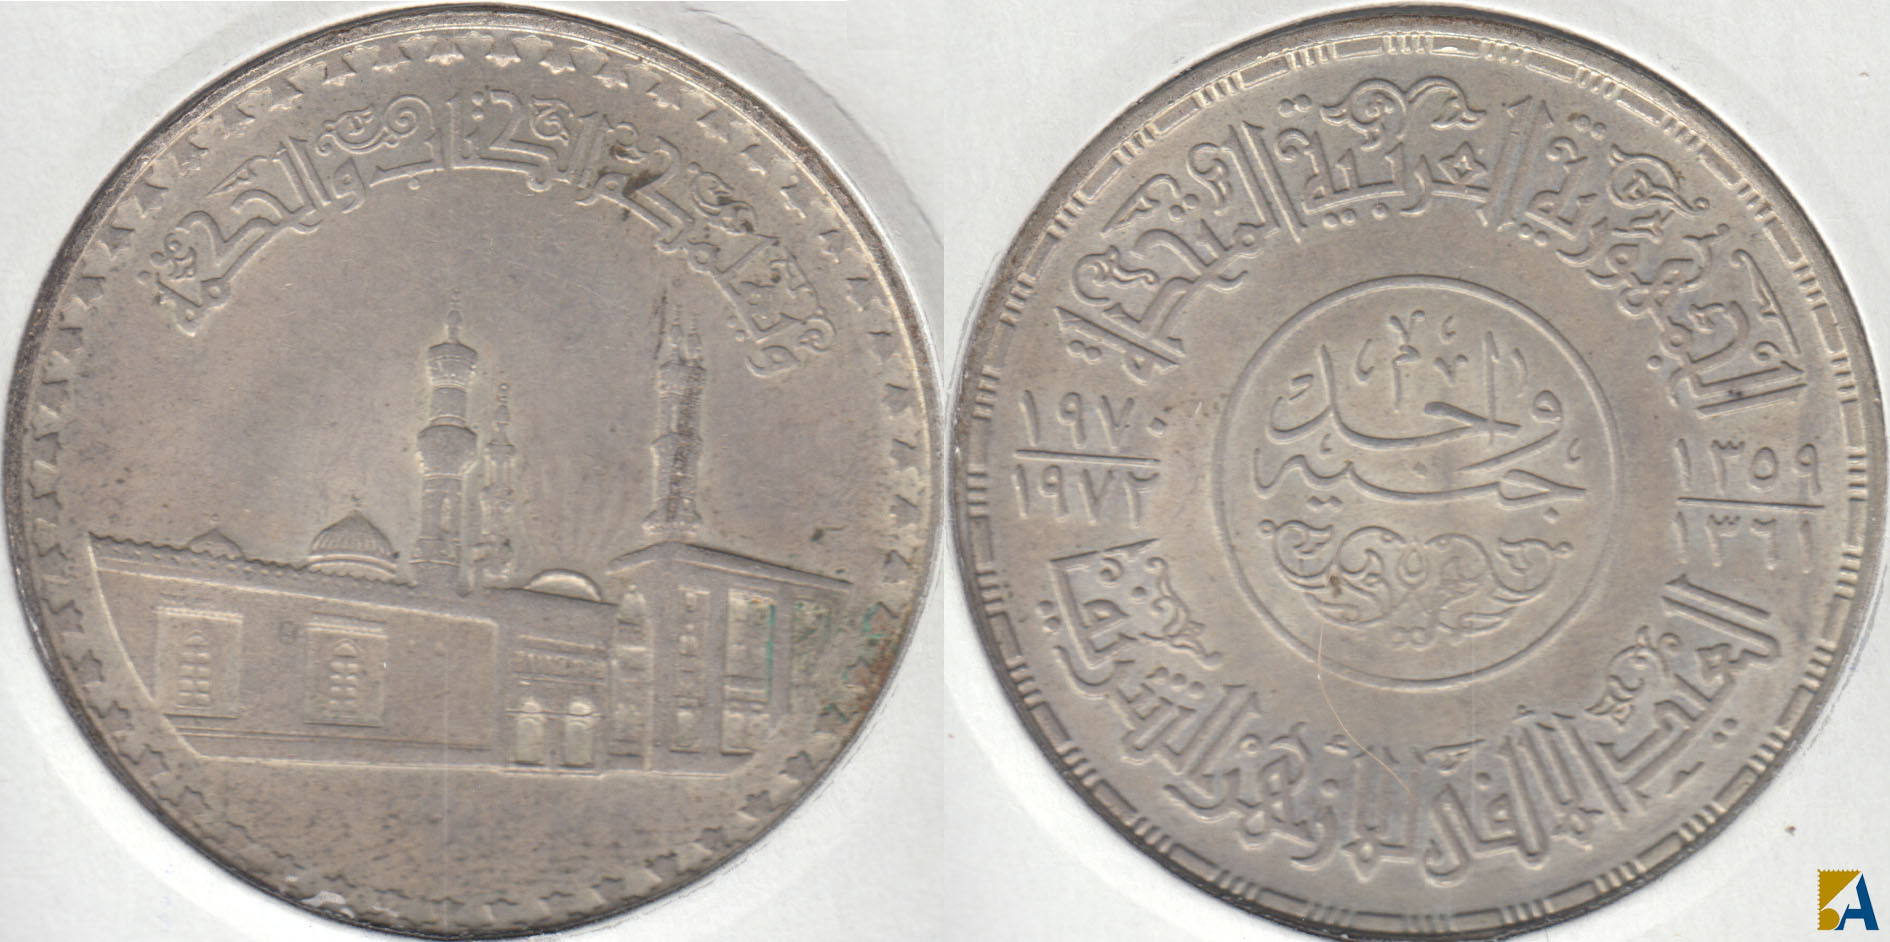 EGIPTO - EGYPT. 1 LIBRA (POUND) DE 1970. PLATA 0.720. (3)